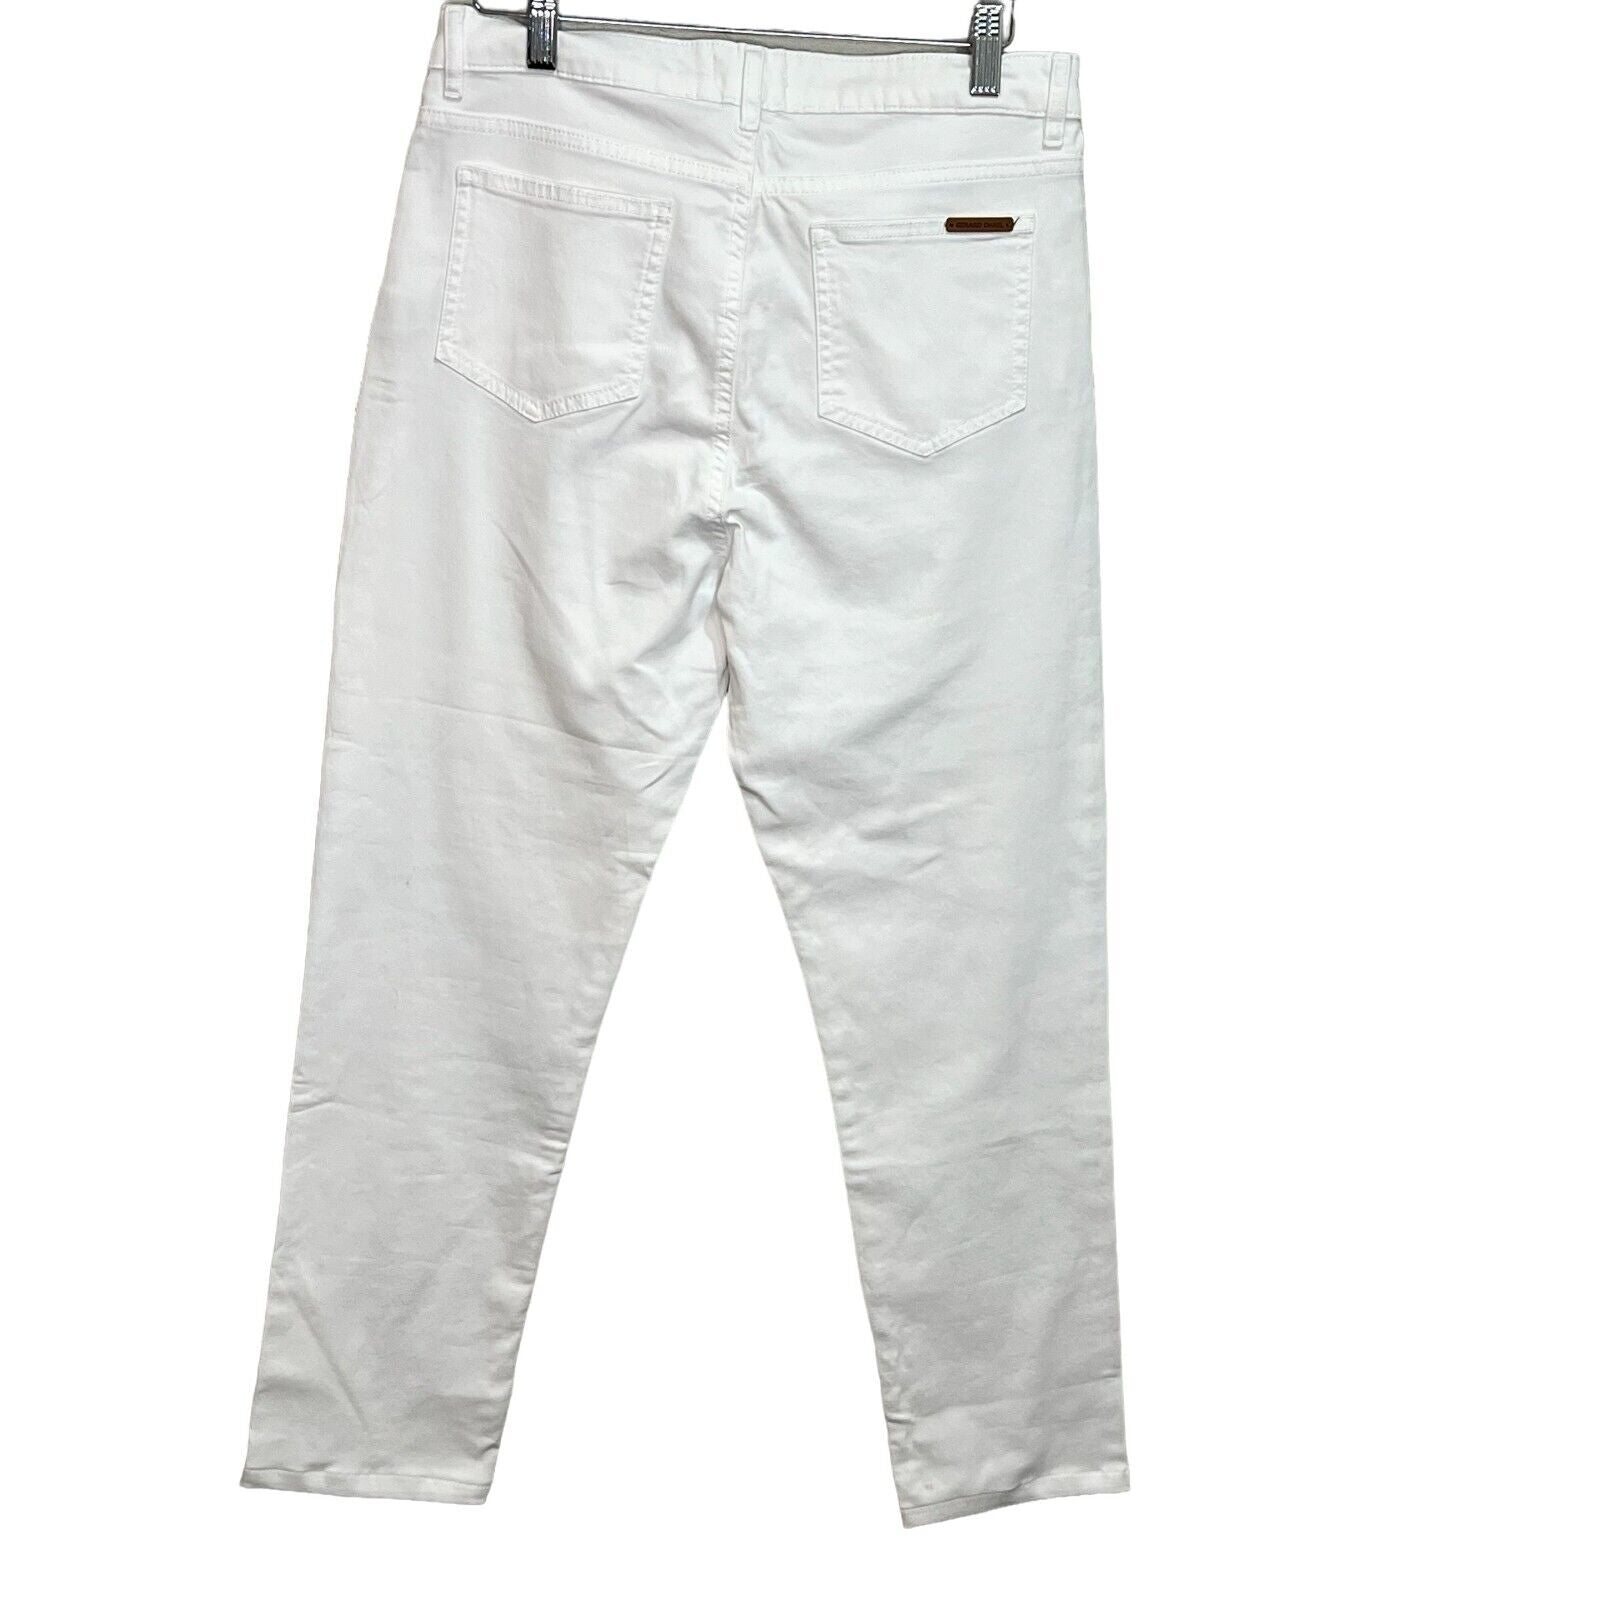 Gerard Darel Maya Cigarette Pants in White US Size 8 (FR 40) NEW $235